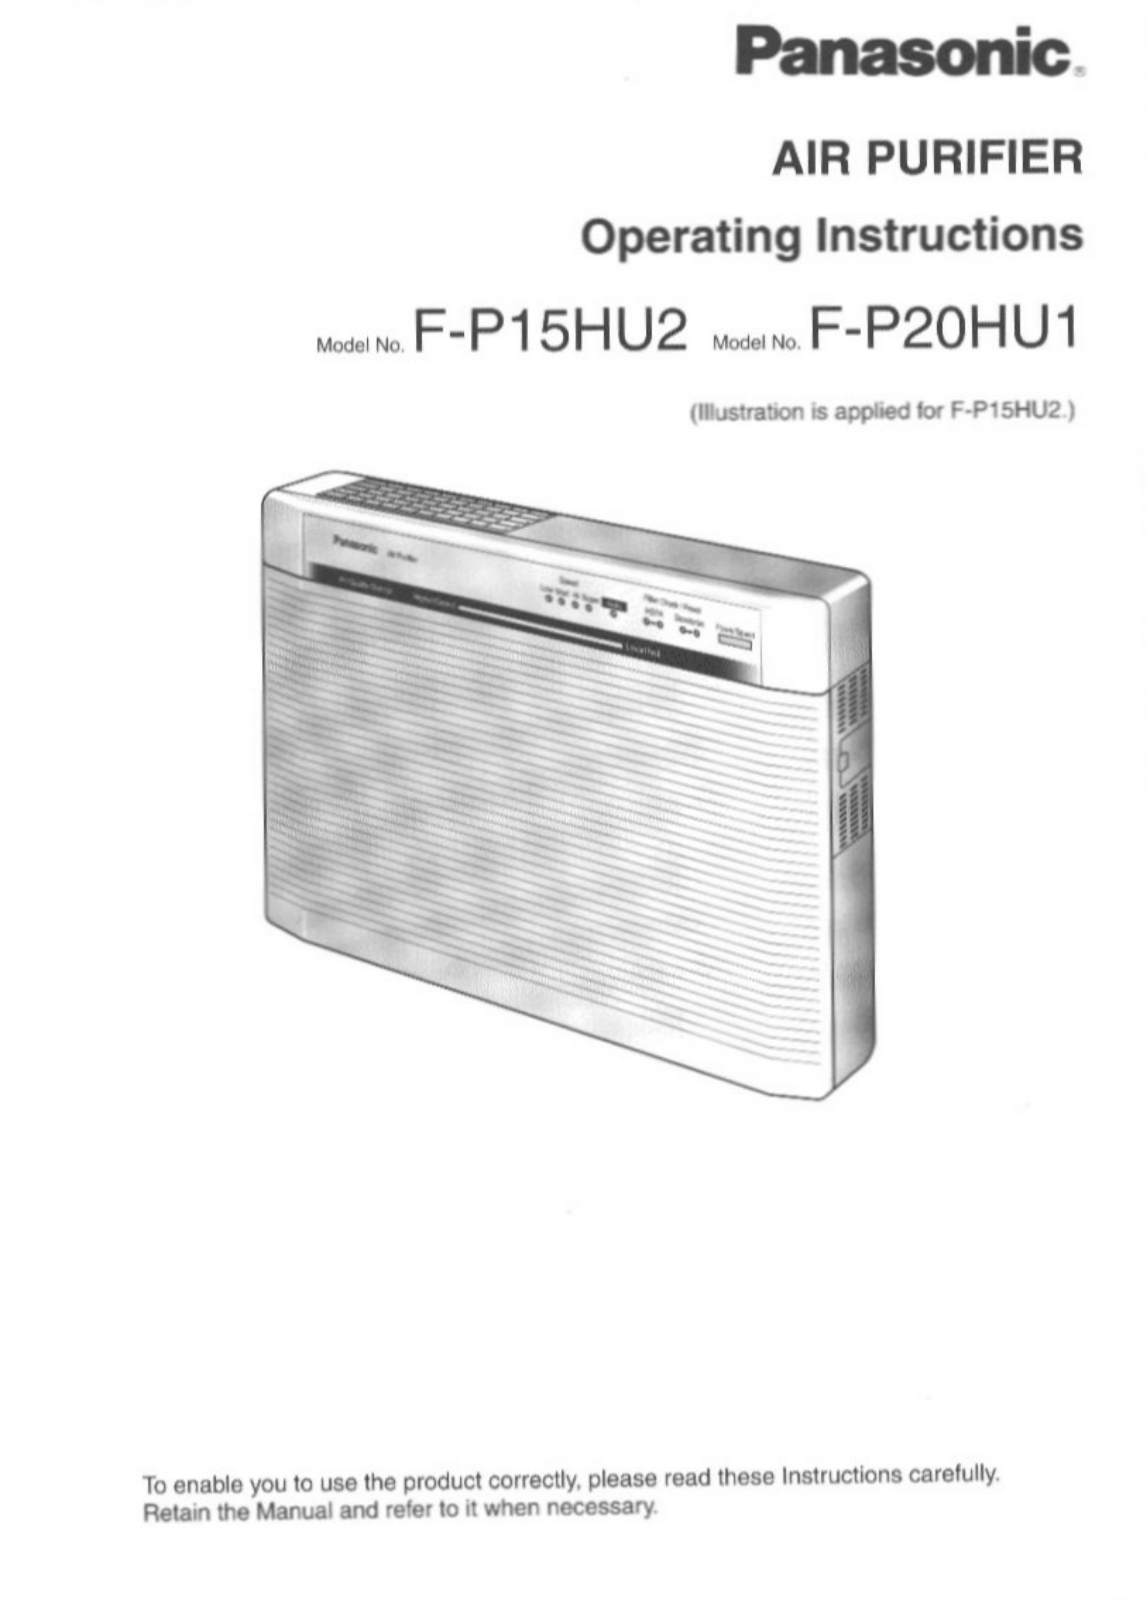 Panasonic F-p20hu1 Owner's Manual